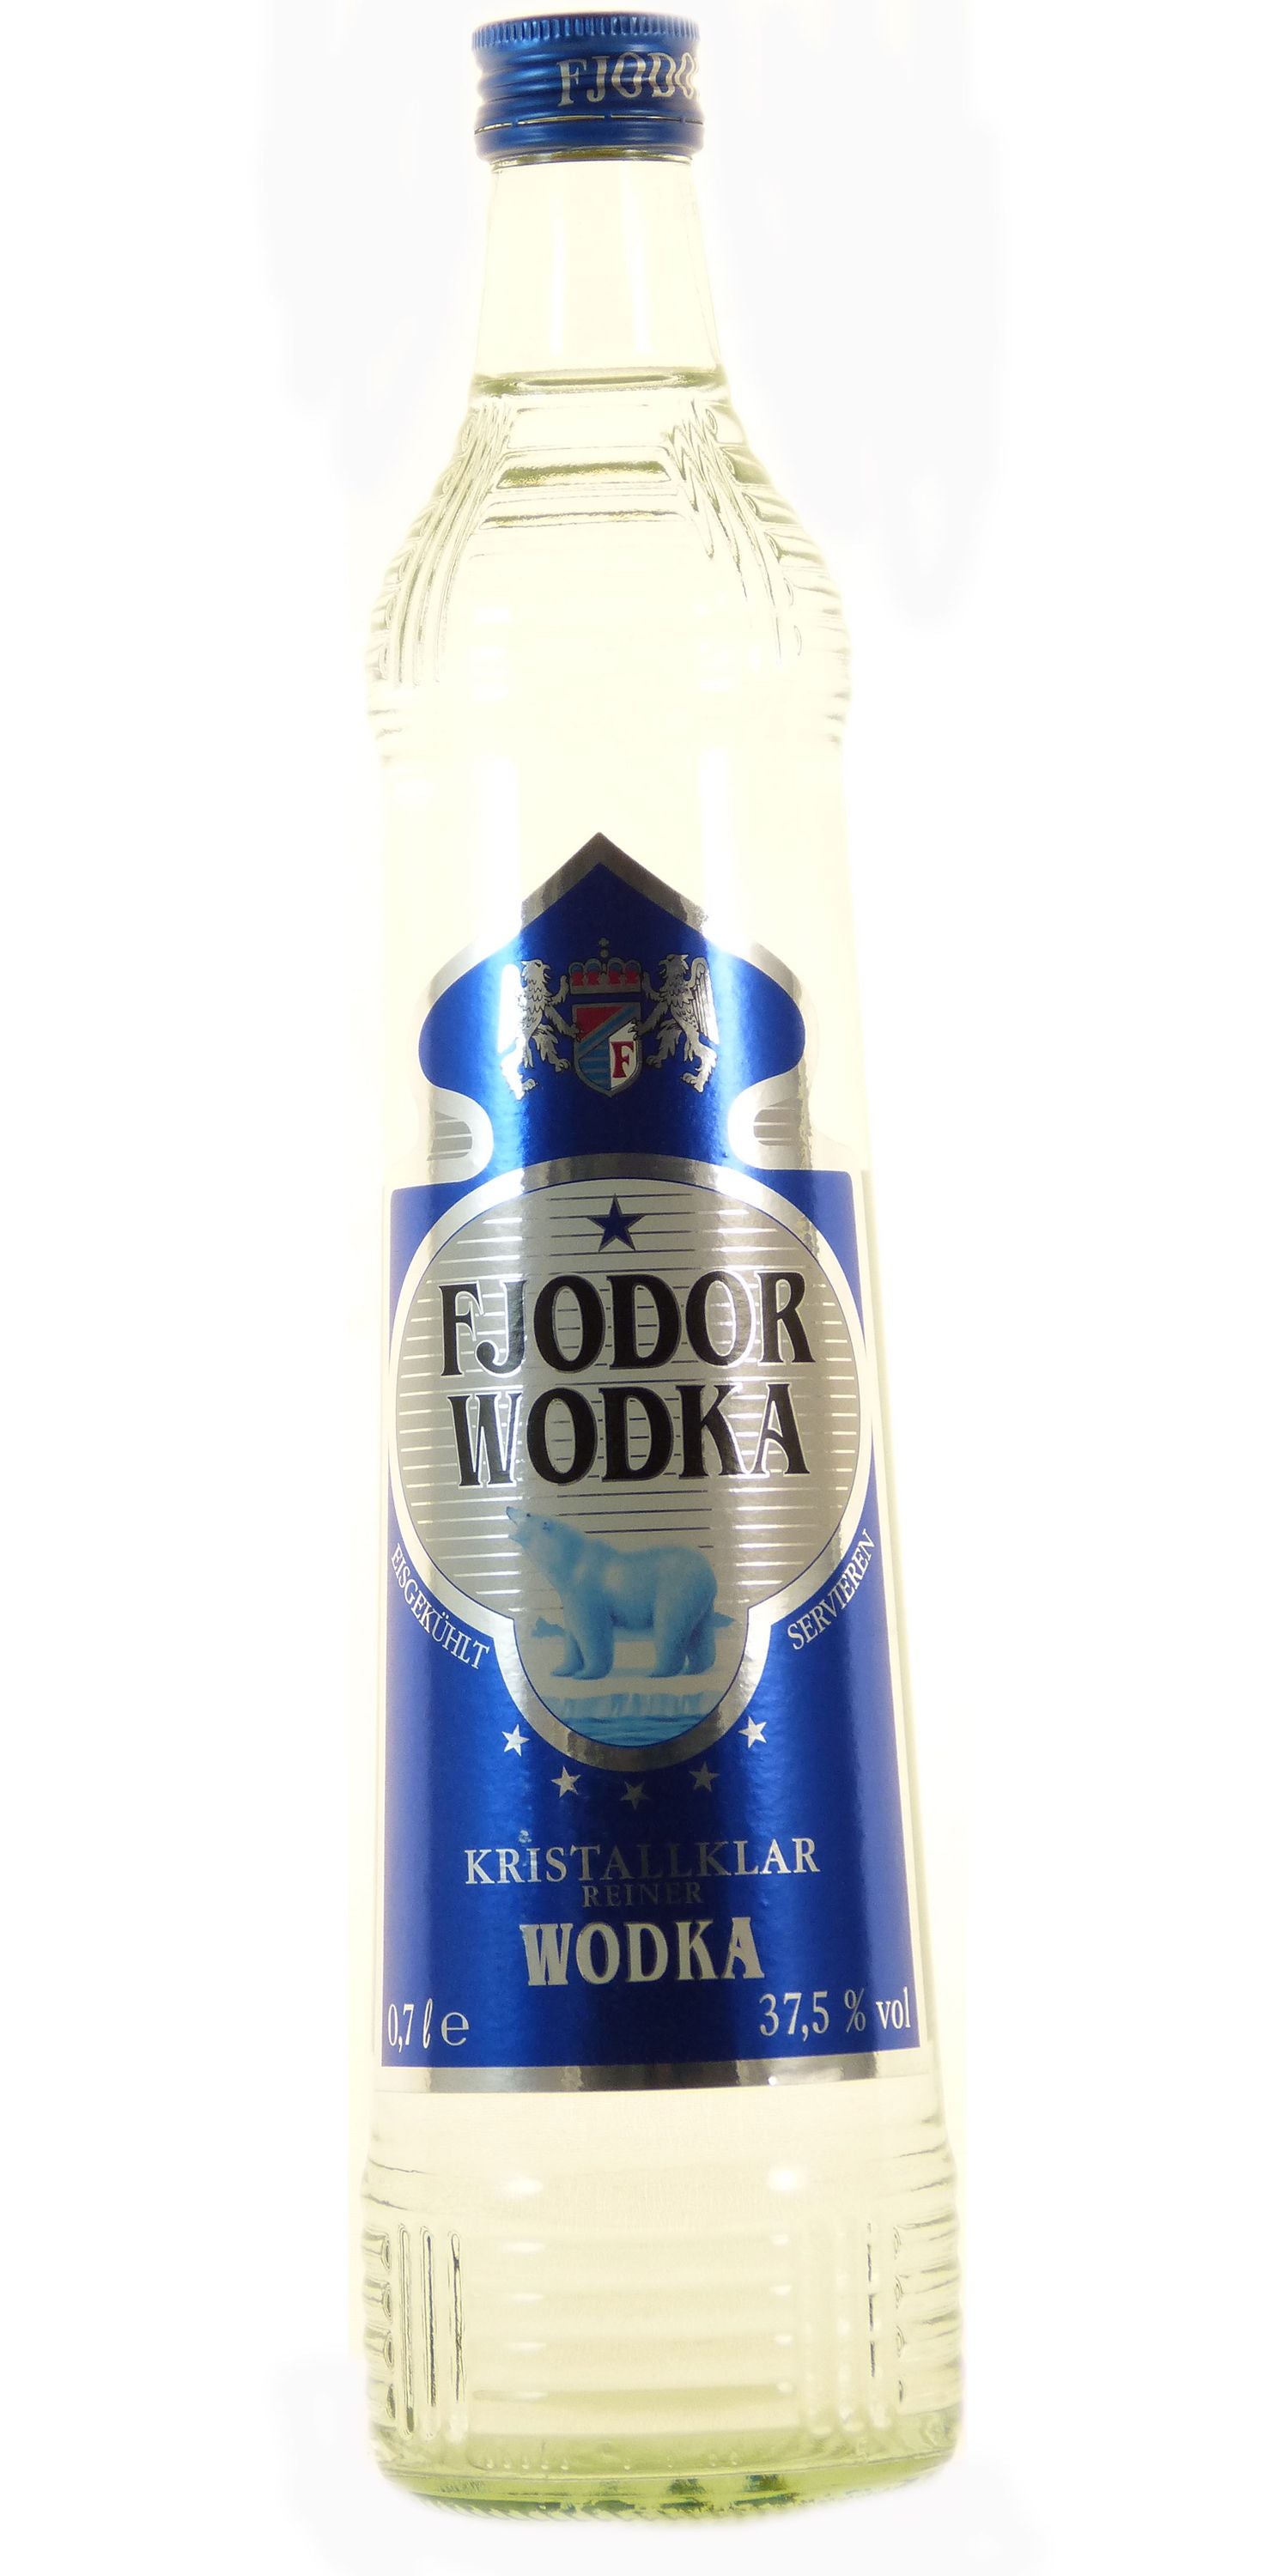 Fjodor 0.7 liter alc. 37.5% by volume, vodka Germany